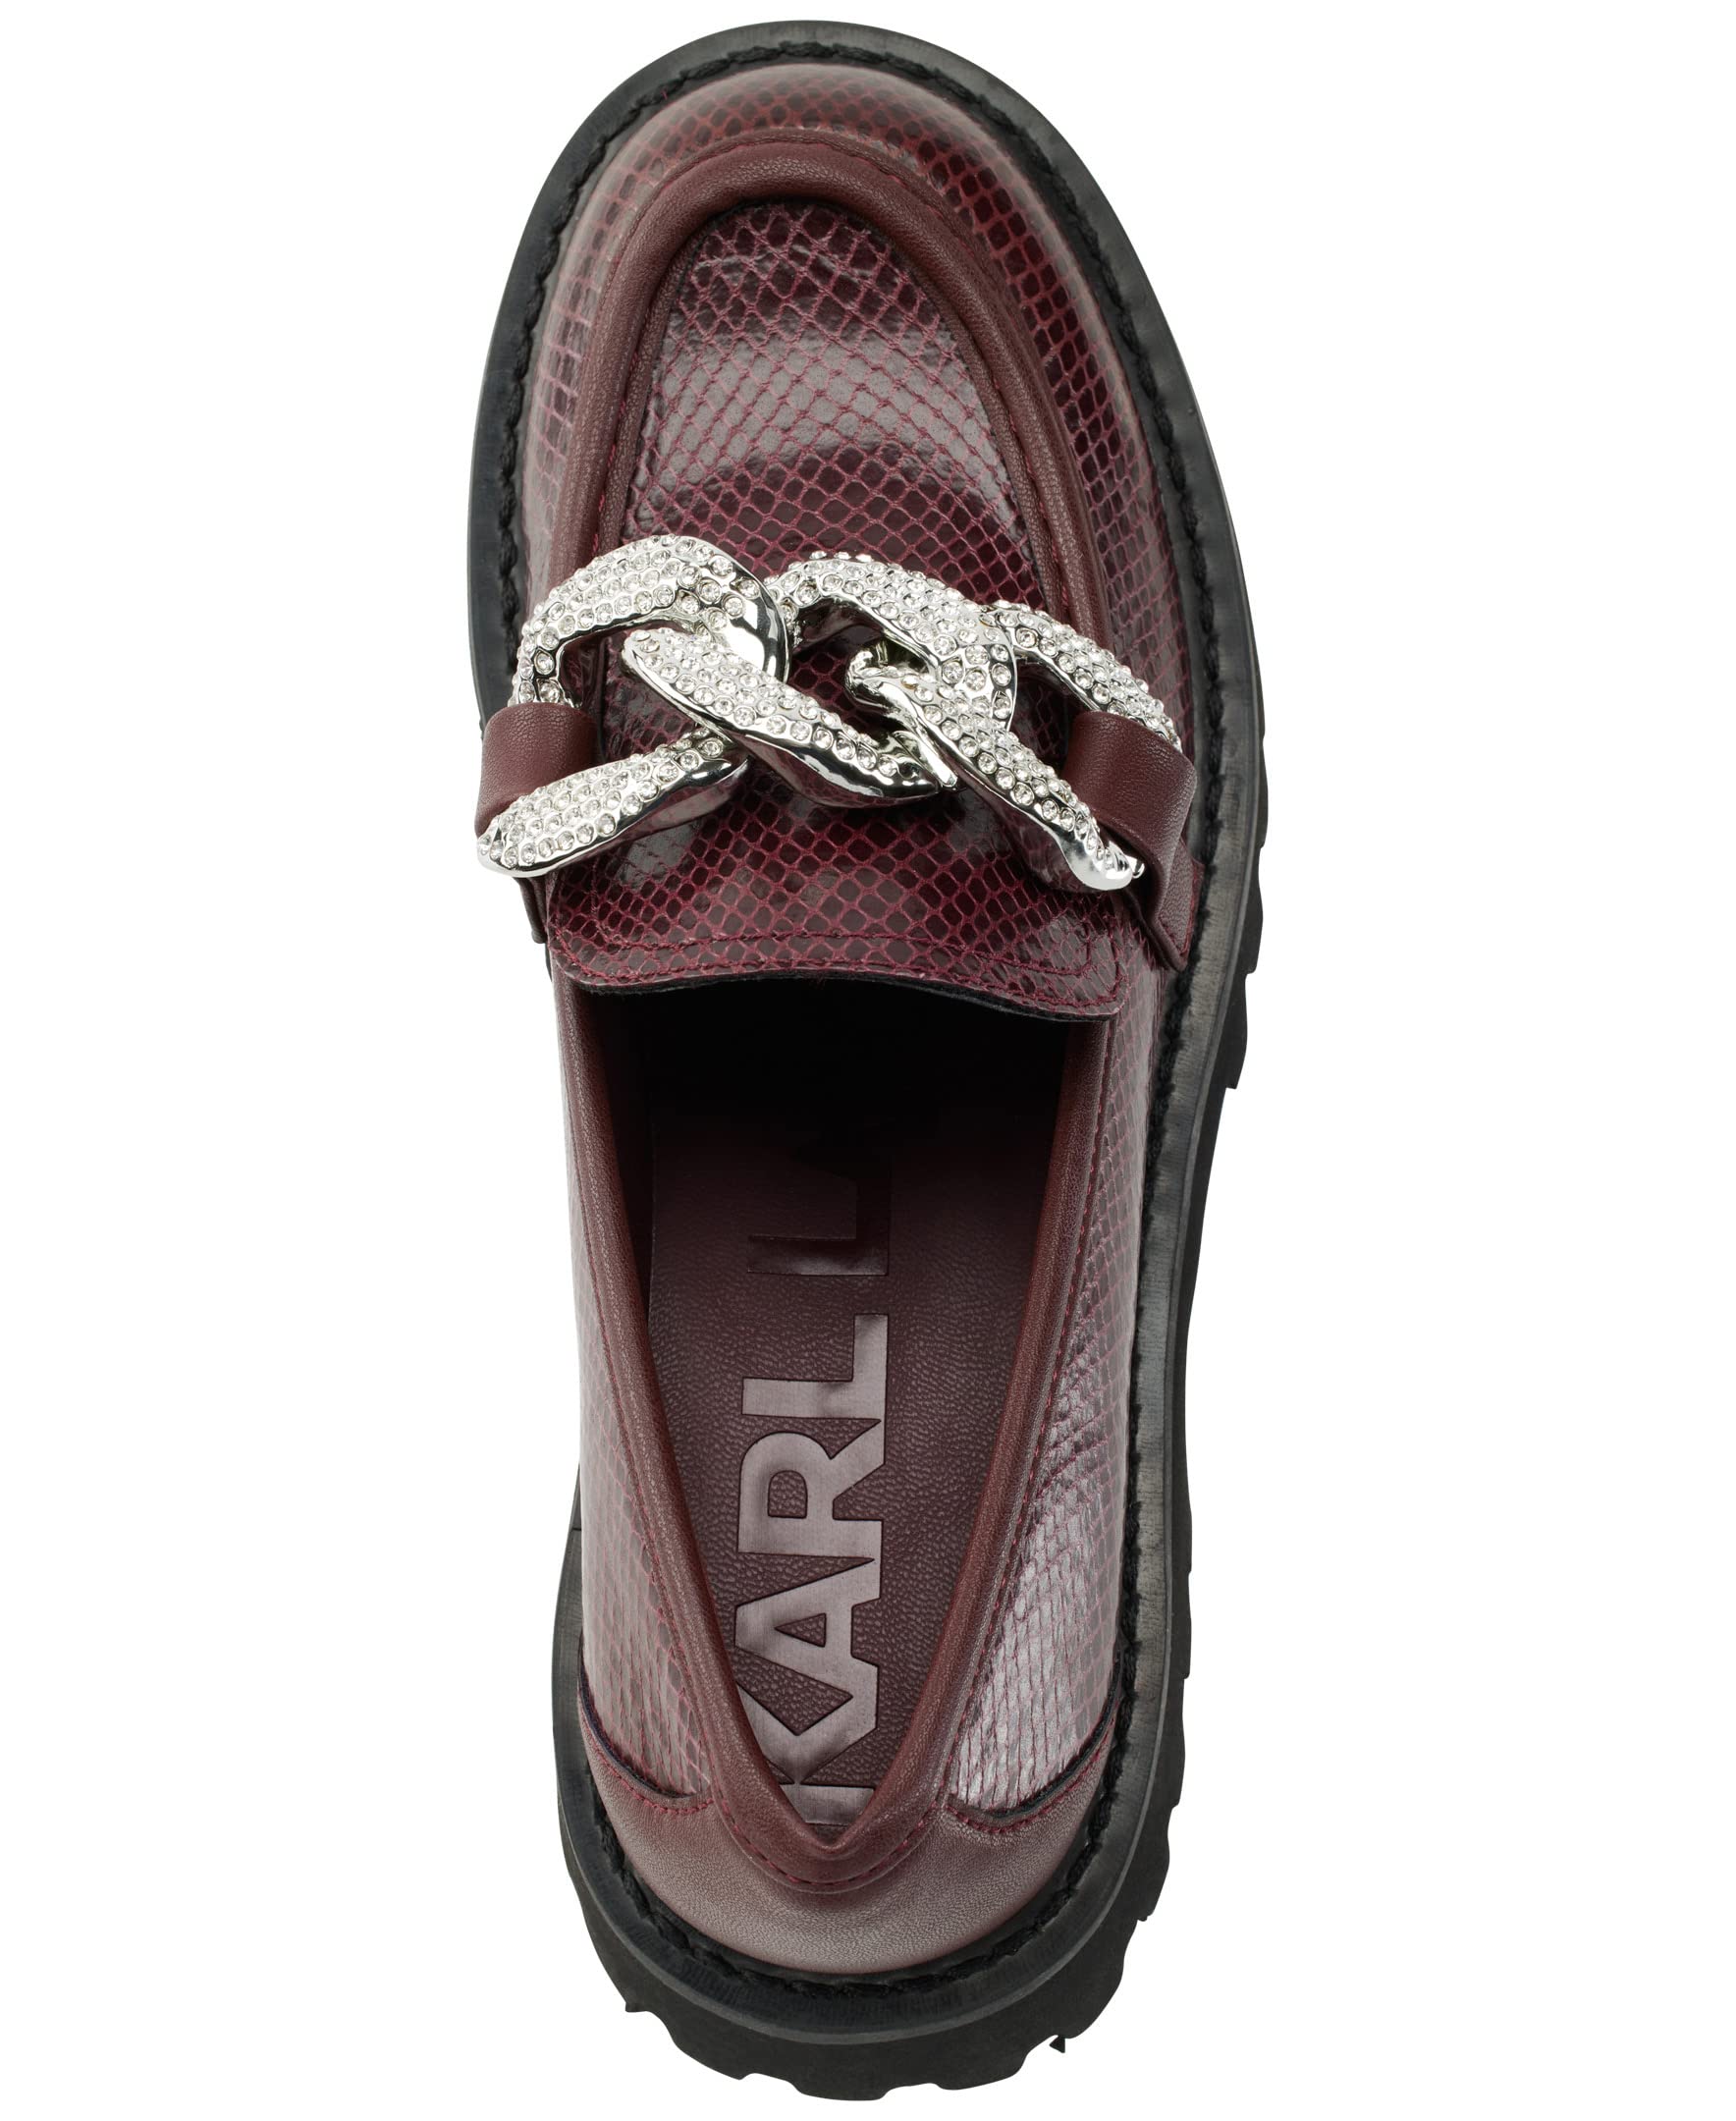 Karl Lagerfeld Paris Women's Giana-Slip on Shoe Loafer Flat